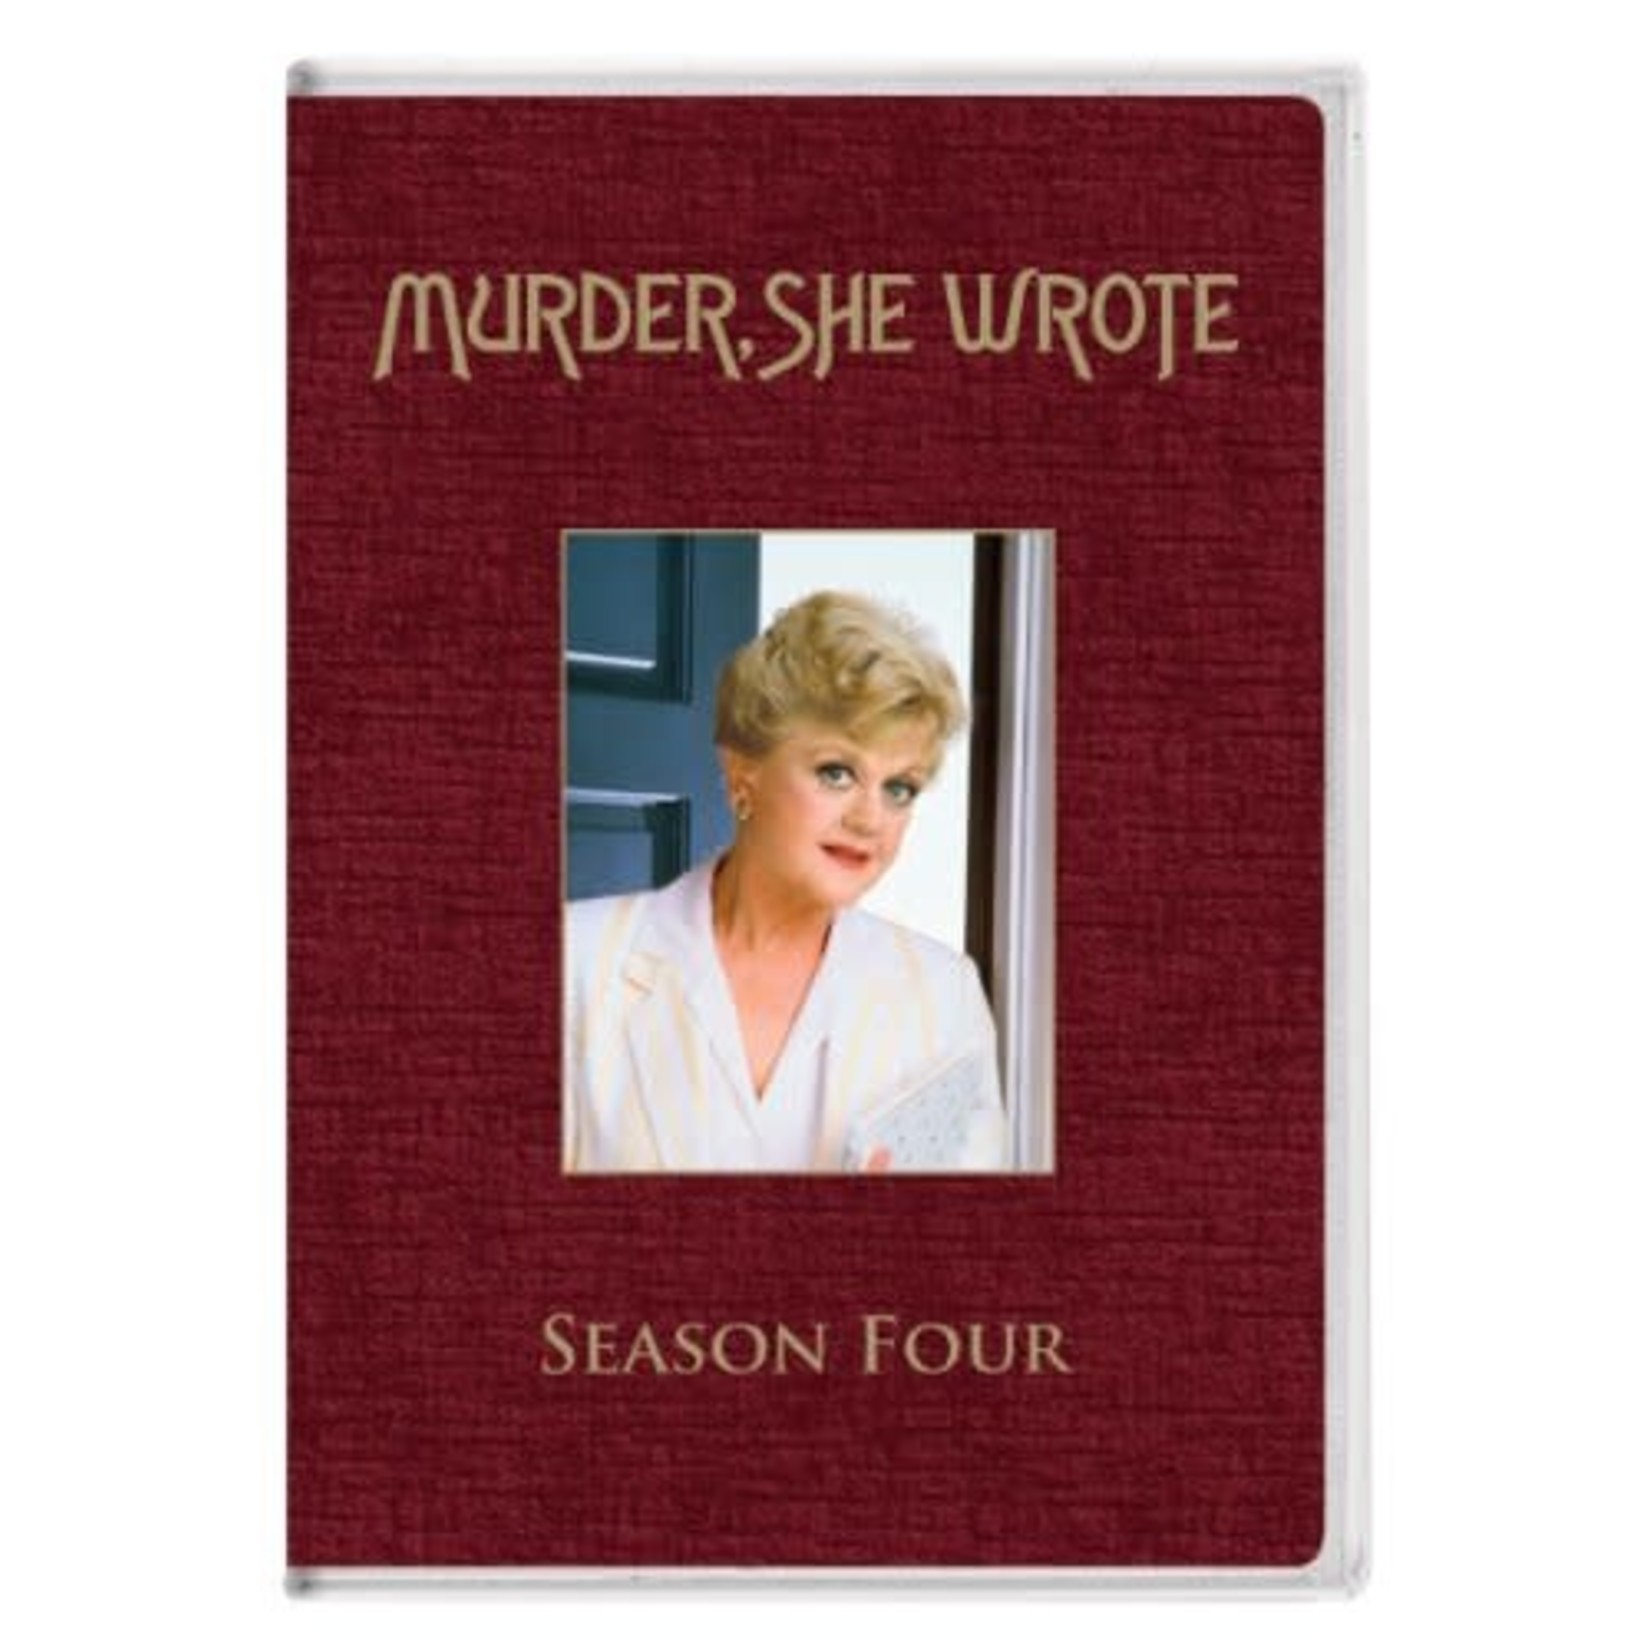 Murder, She Wrote - Season 4 [USED DVD]